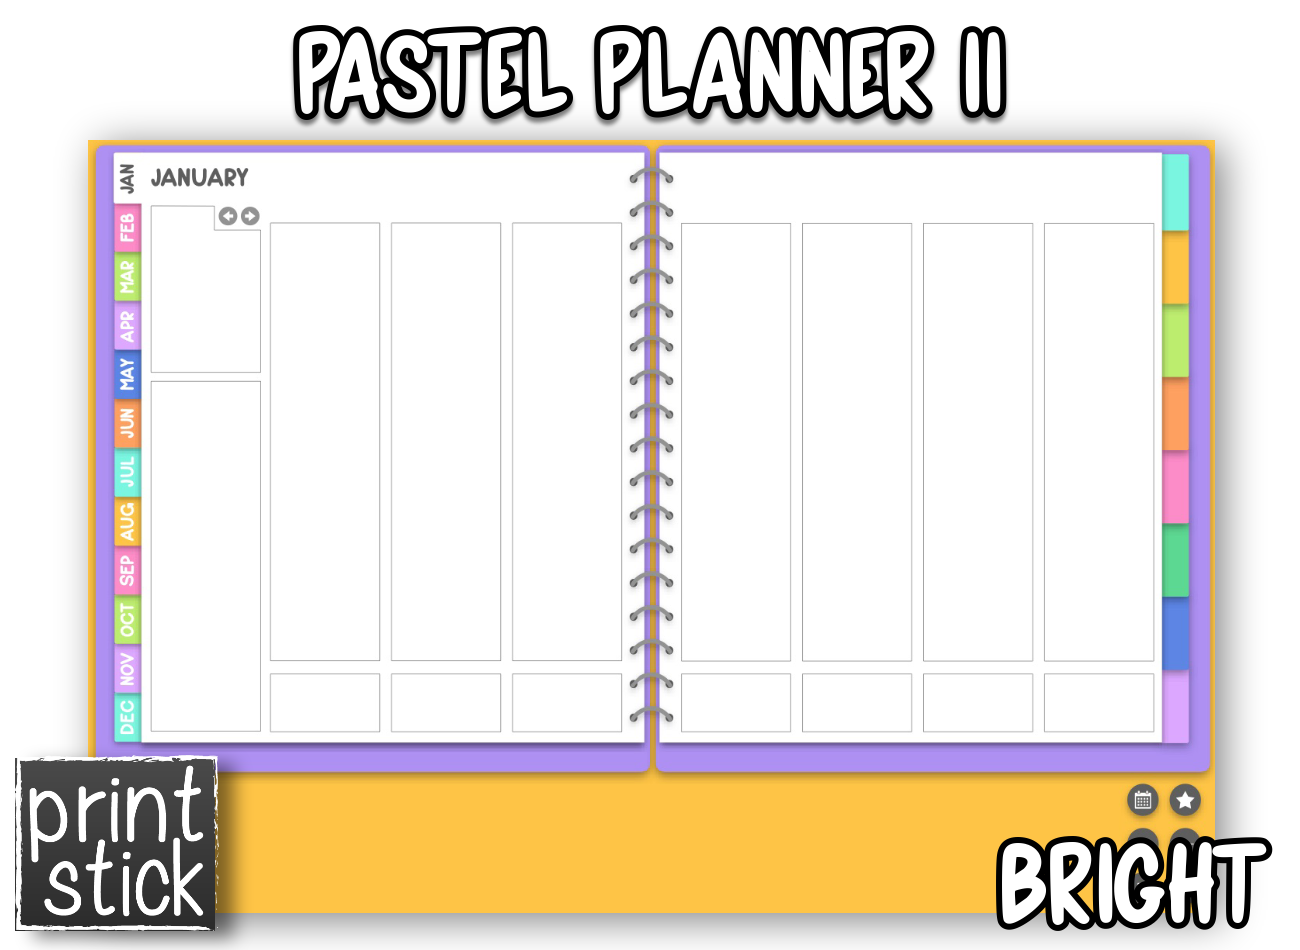 Pastel Planner II - Print Stick